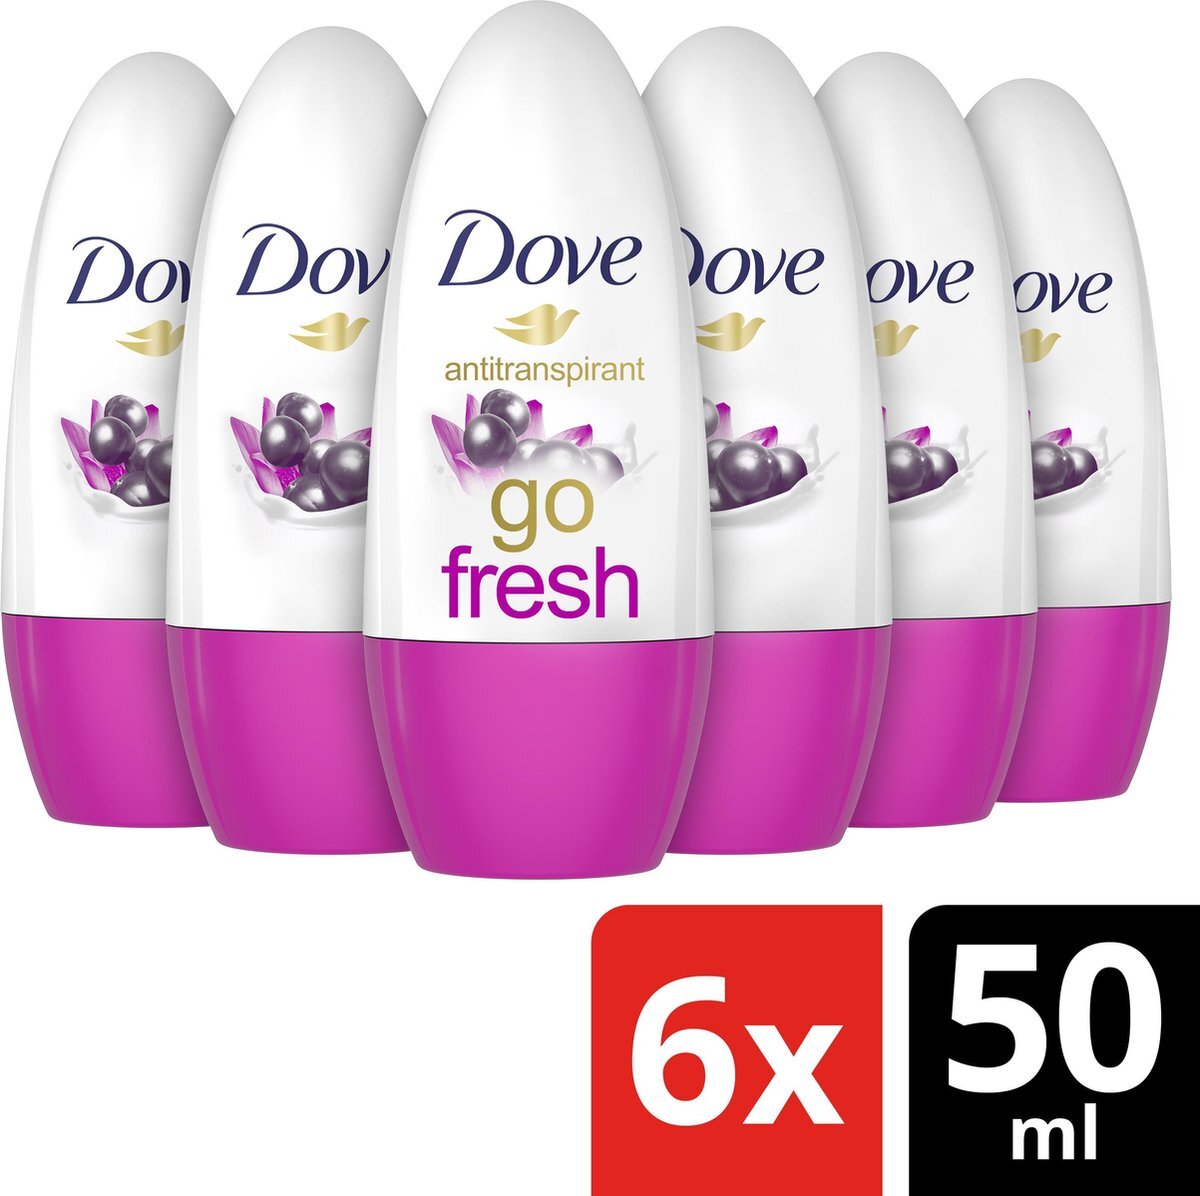 Dove Go Fresh Acai Berry & Waterlily Deodorant Roller antitranspirant - 6 x 50 ml